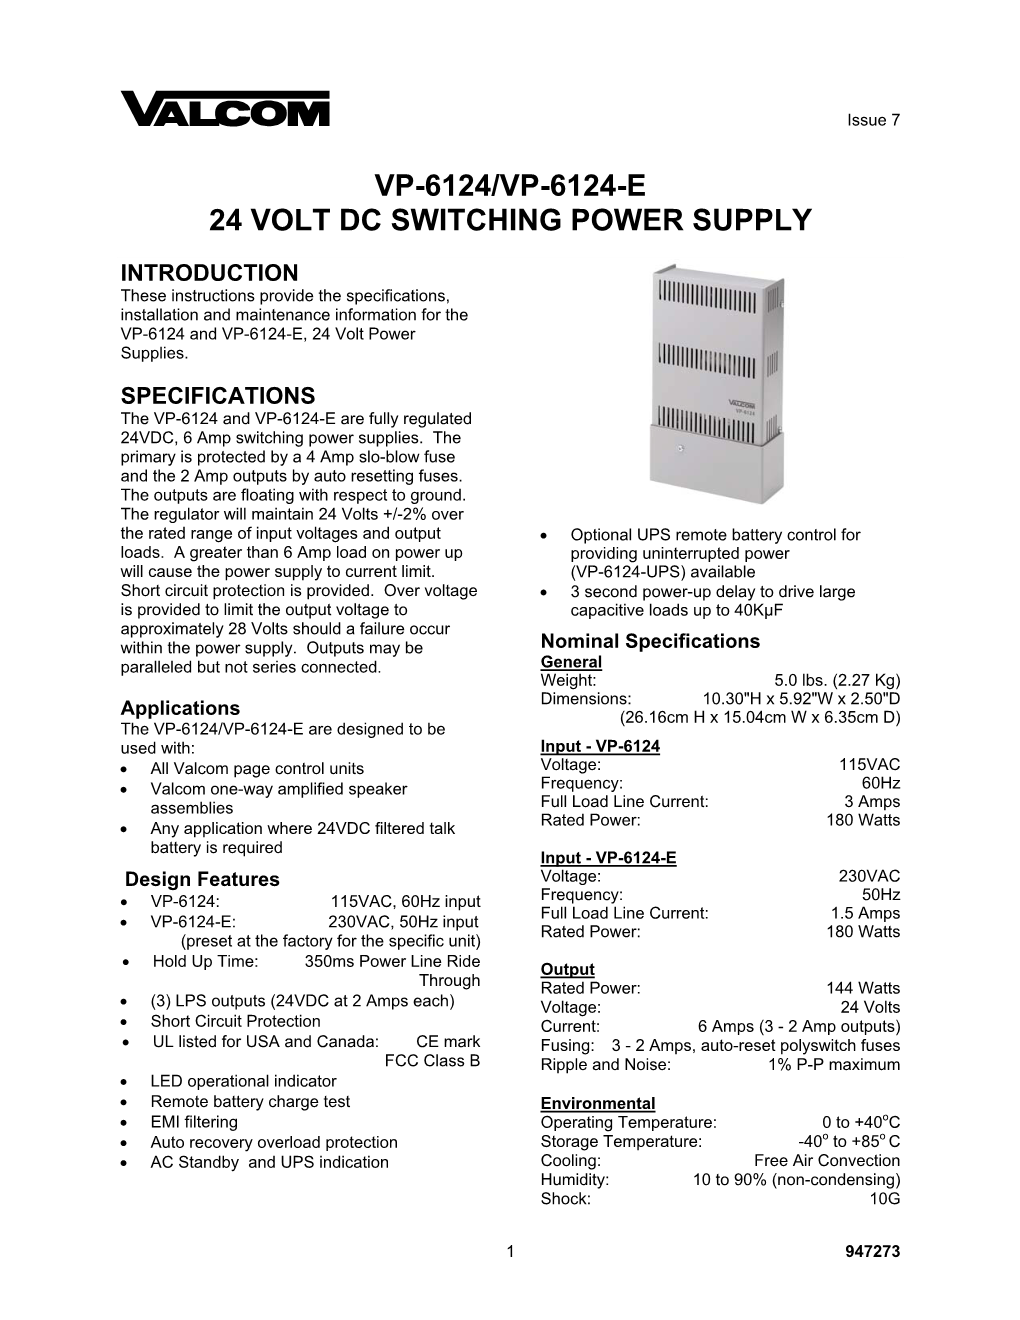 Vp-6124/Vp-6124-E 24 Volt Dc Switching Power Supply